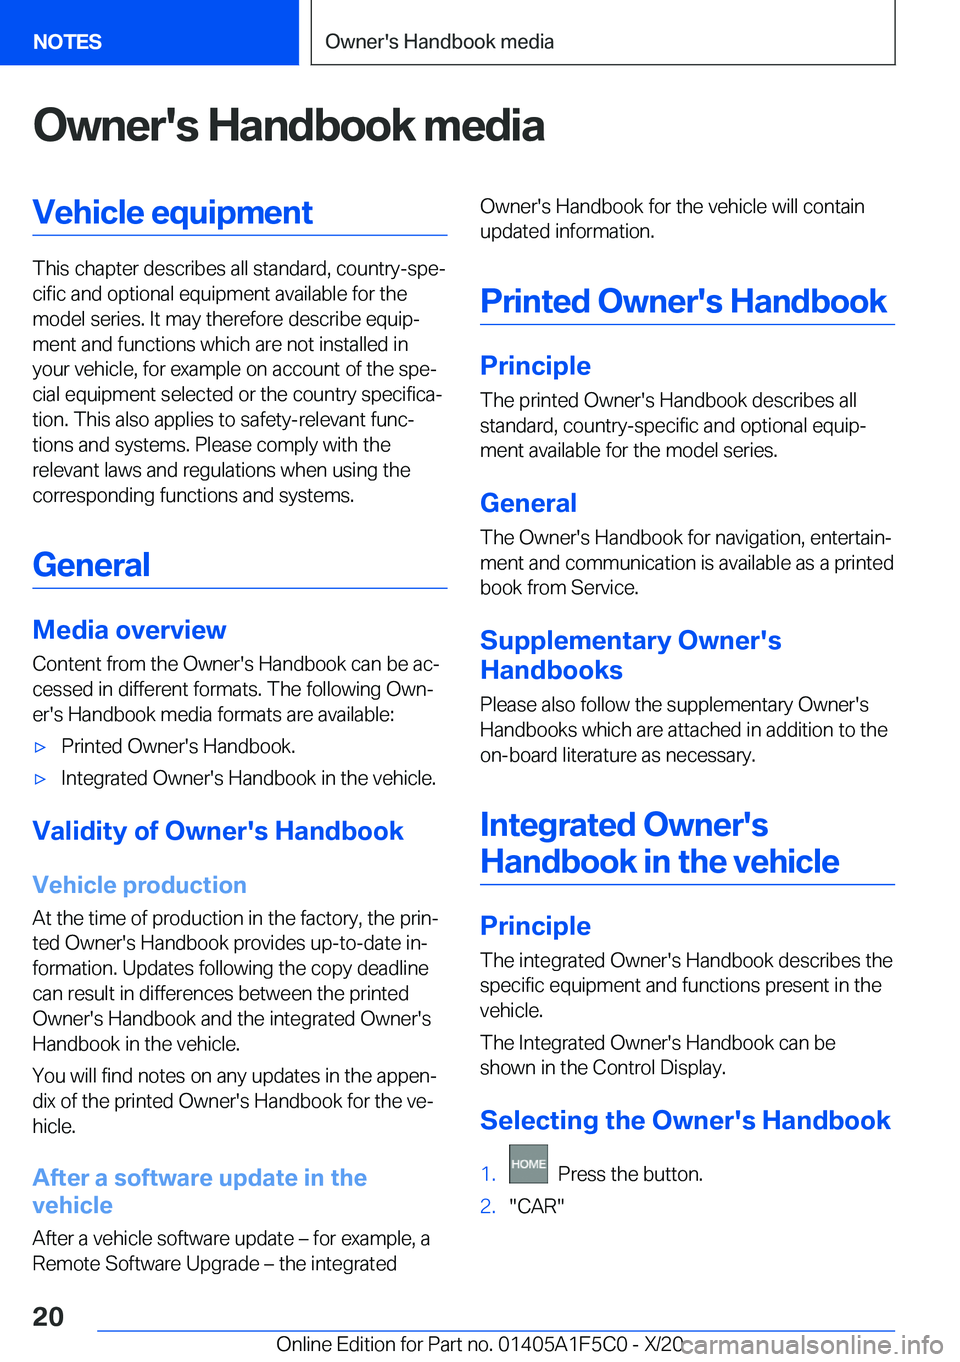 BMW X4 M 2021 User Guide �O�w�n�e�r�'�s��H�a�n�d�b�o�o�k��m�e�d�i�a�V�e�h�i�c�l�e��e�q�u�i�p�m�e�n�t
�T�h�i�s��c�h�a�p�t�e�r��d�e�s�c�r�i�b�e�s��a�l�l��s�t�a�n�d�a�r�d�,��c�o�u�n�t�r�y�-�s�p�ej�c�i�f�i�c��a�n�d�